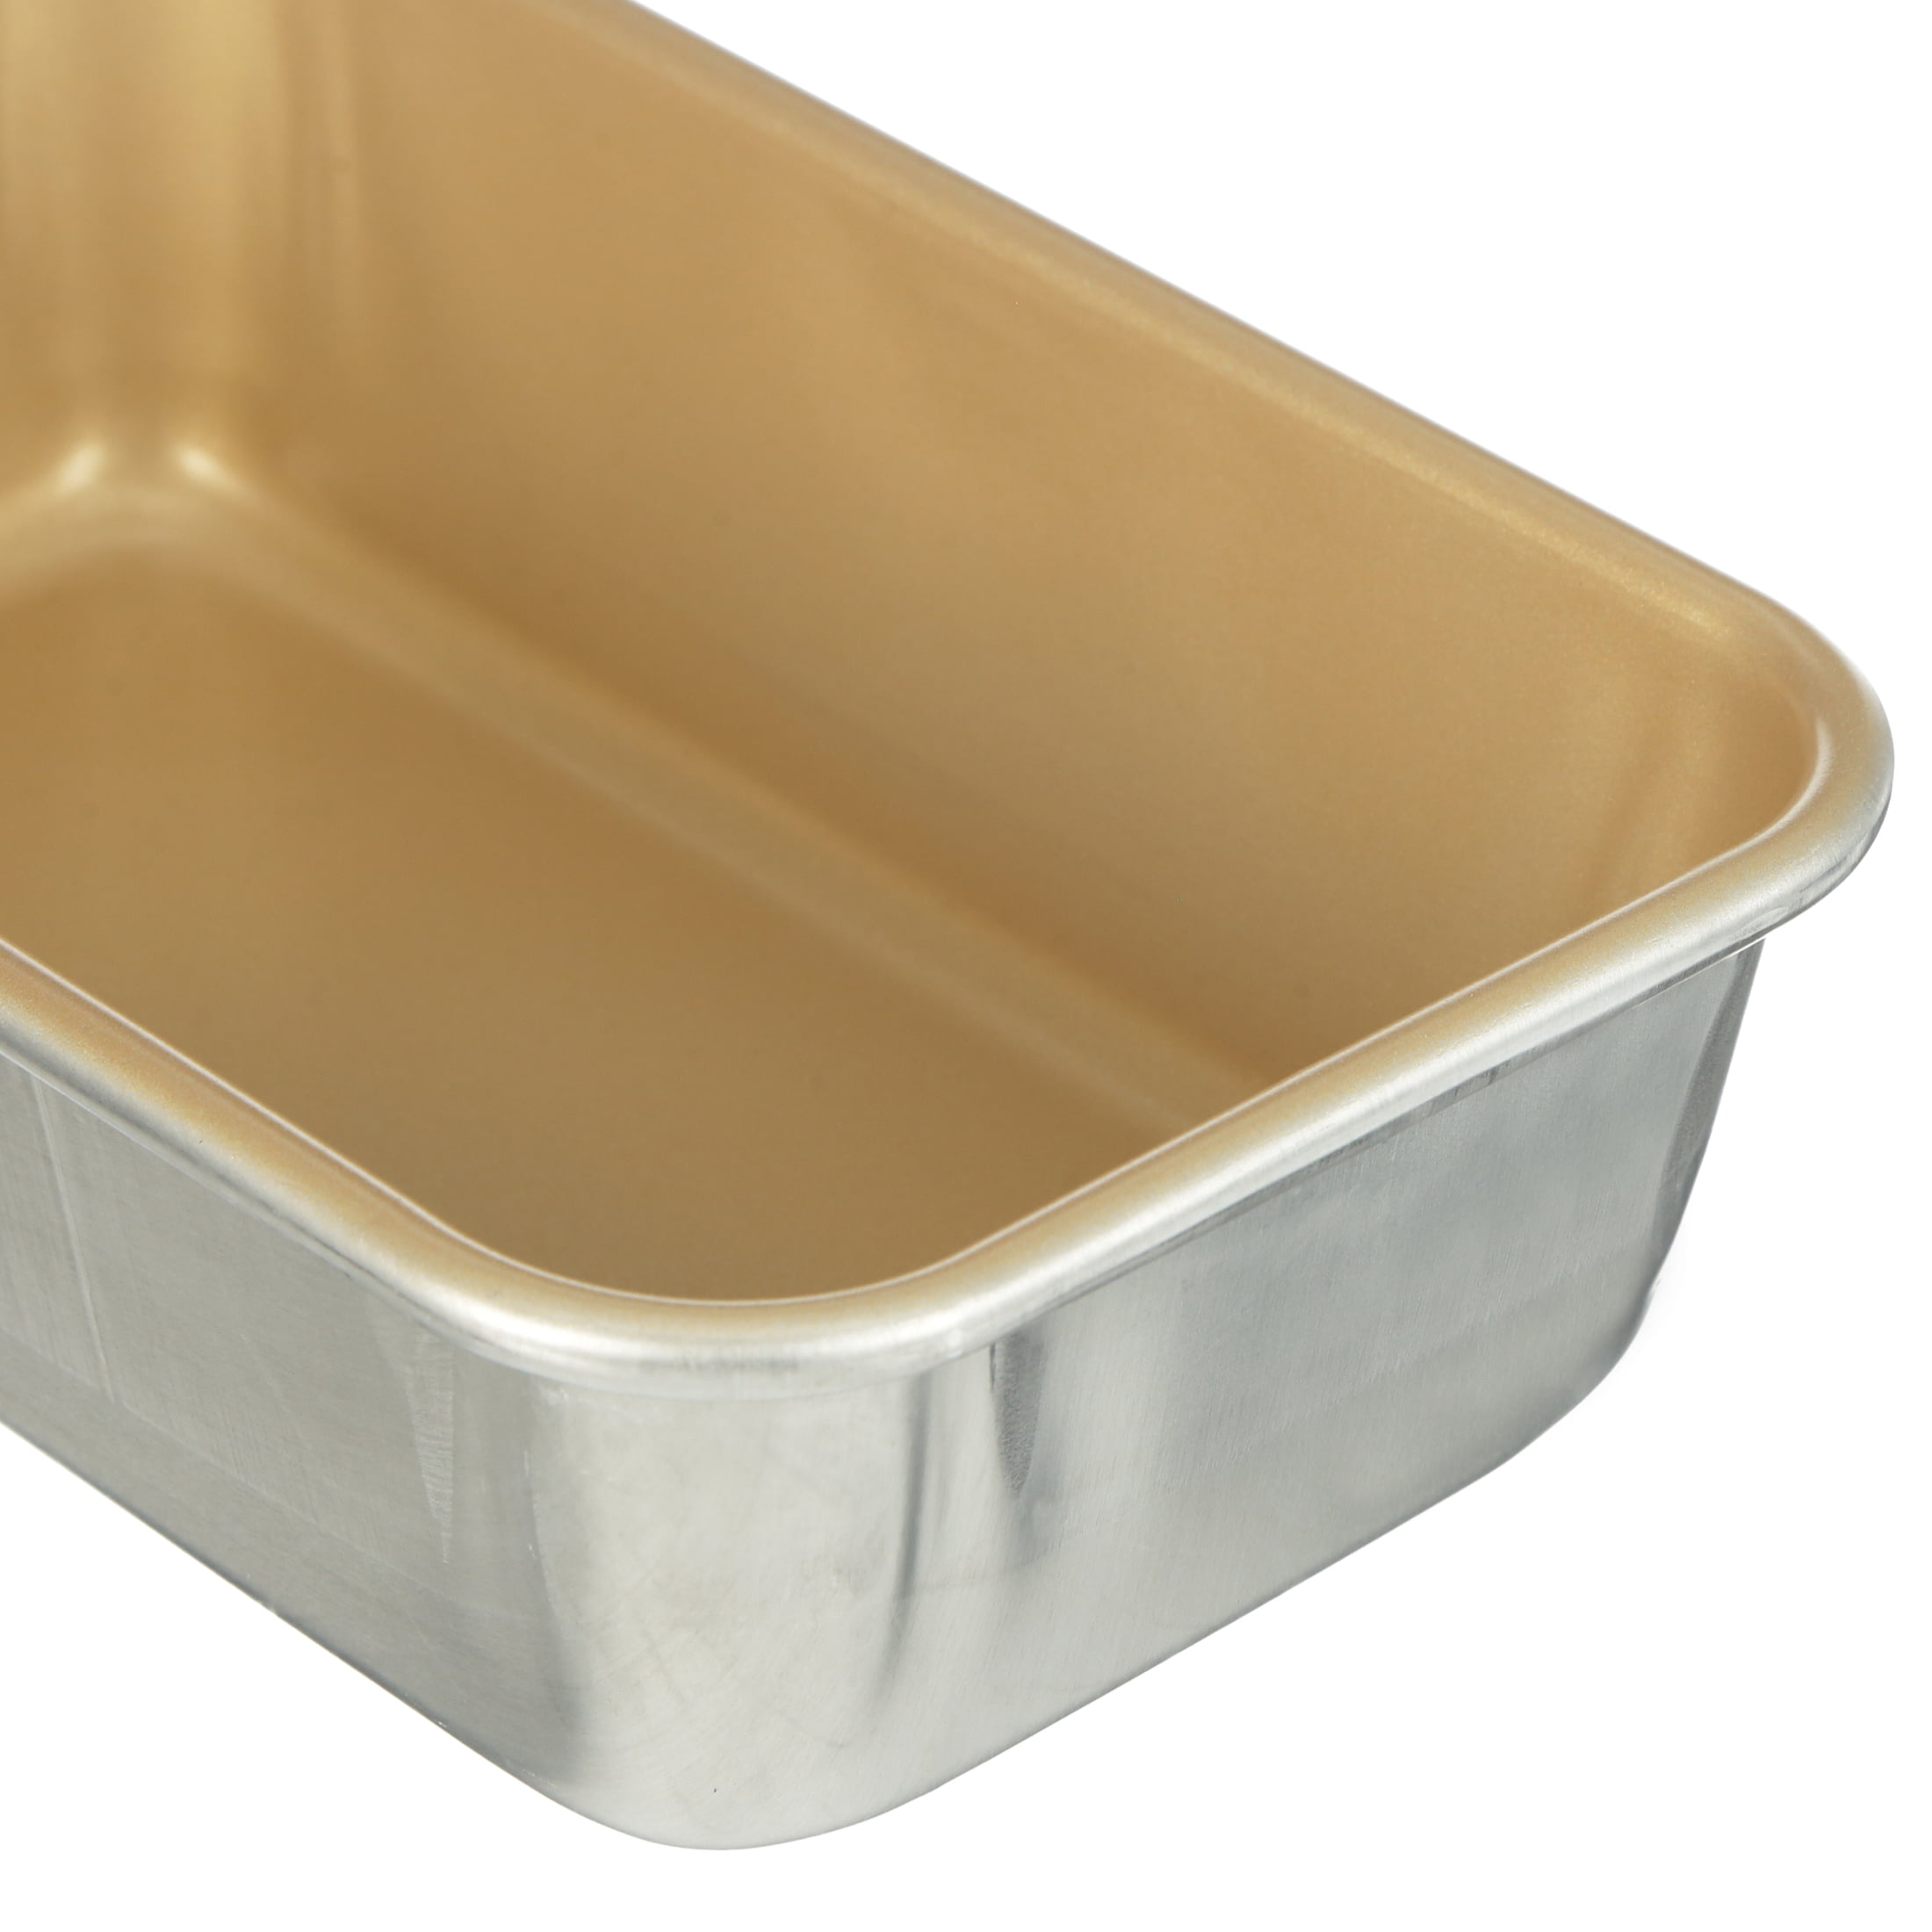 Nordic Ware Naturals Aluminum Loaf Pans, Set of 2, 1.5 Pound on Food52